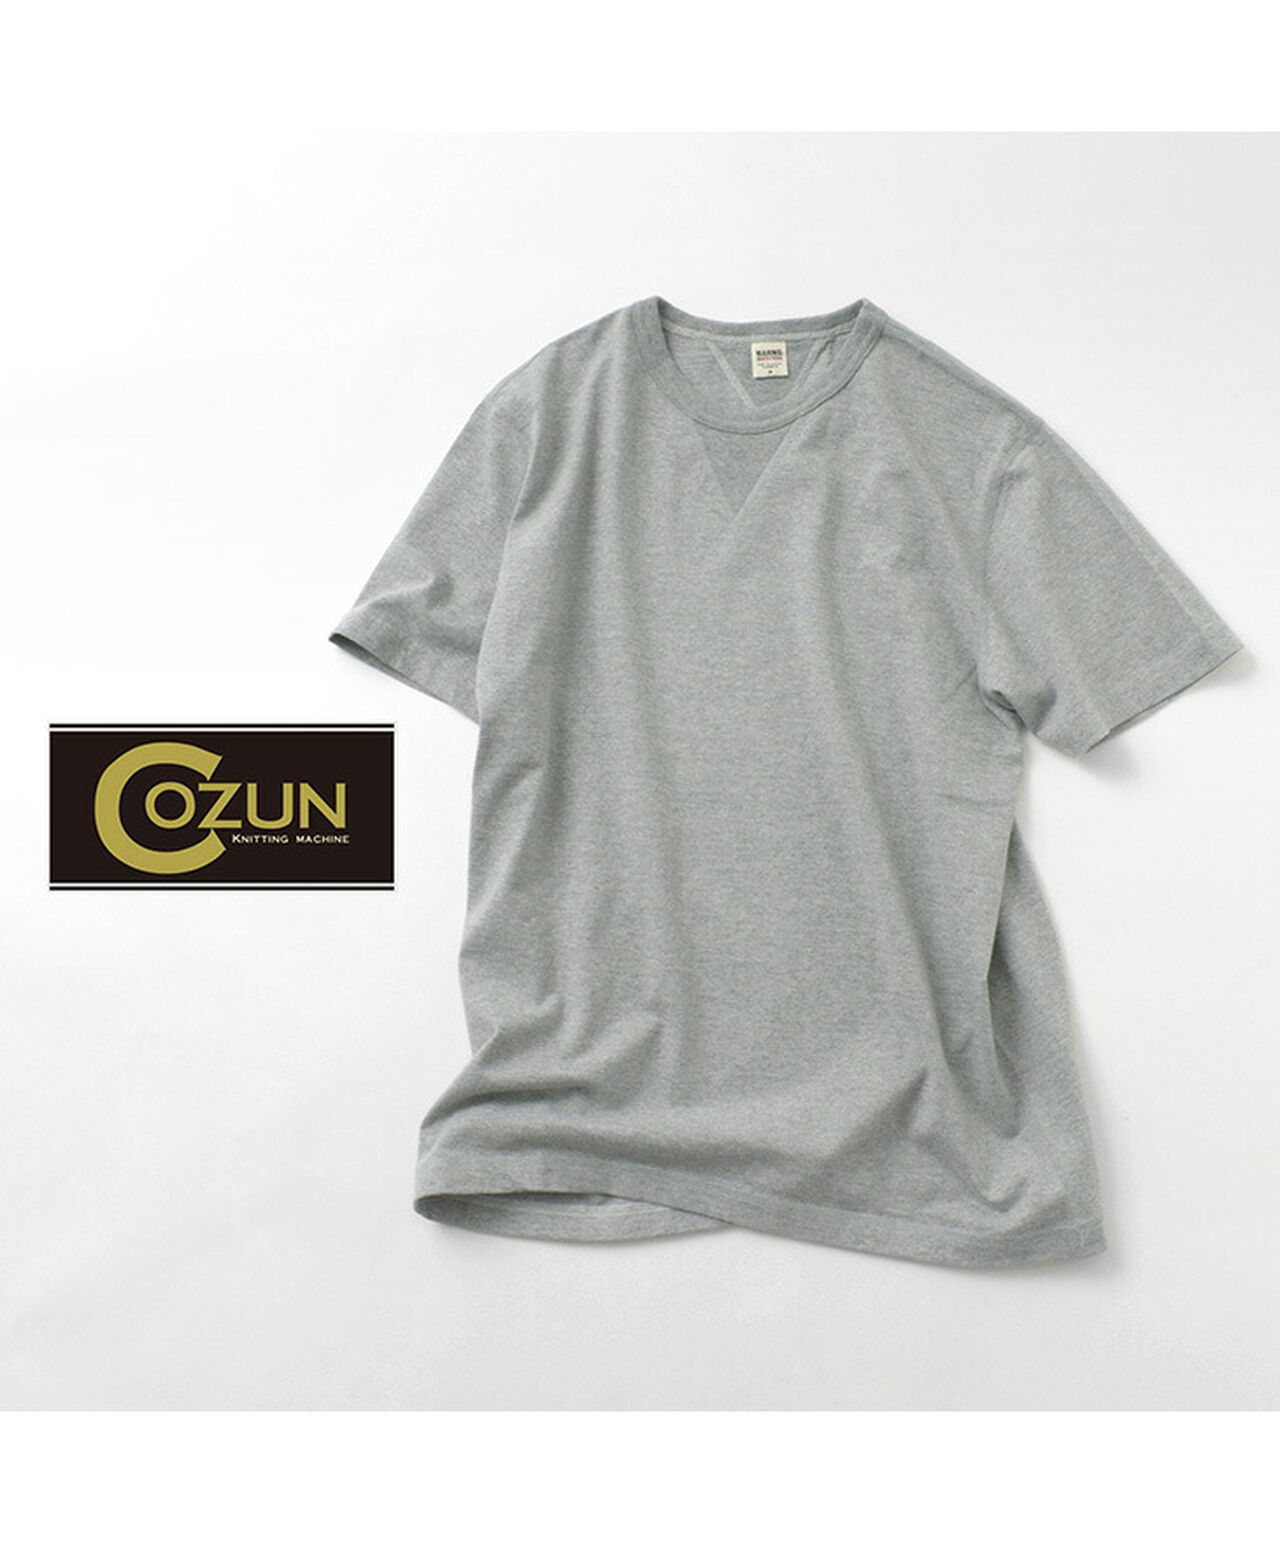 Cozun knitted vintage gusset short sleeve crew neck T-shirt,, large image number 9